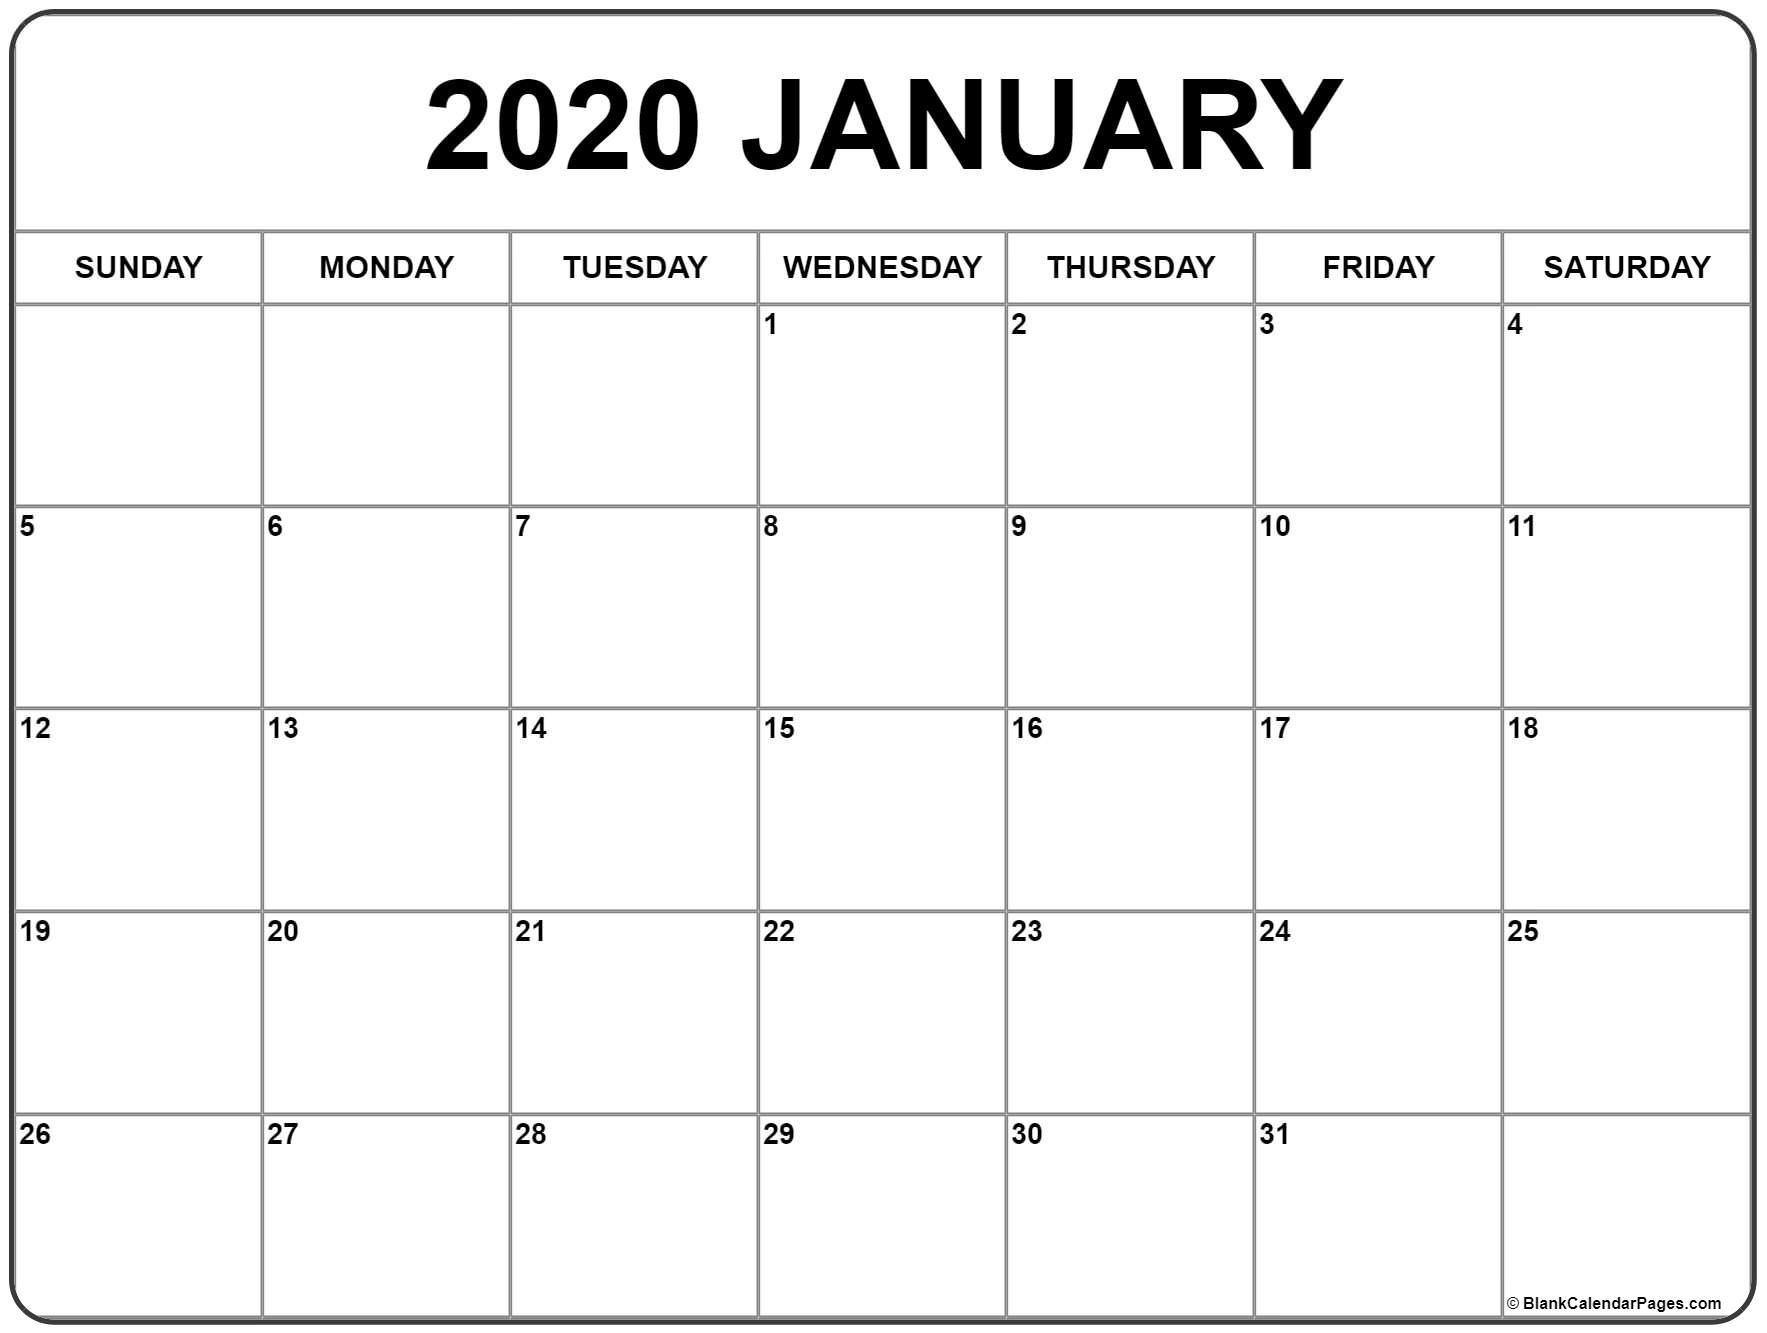 January 2020 Calendar | Free Printable Monthly Calendars-Free January 2020 Calendar